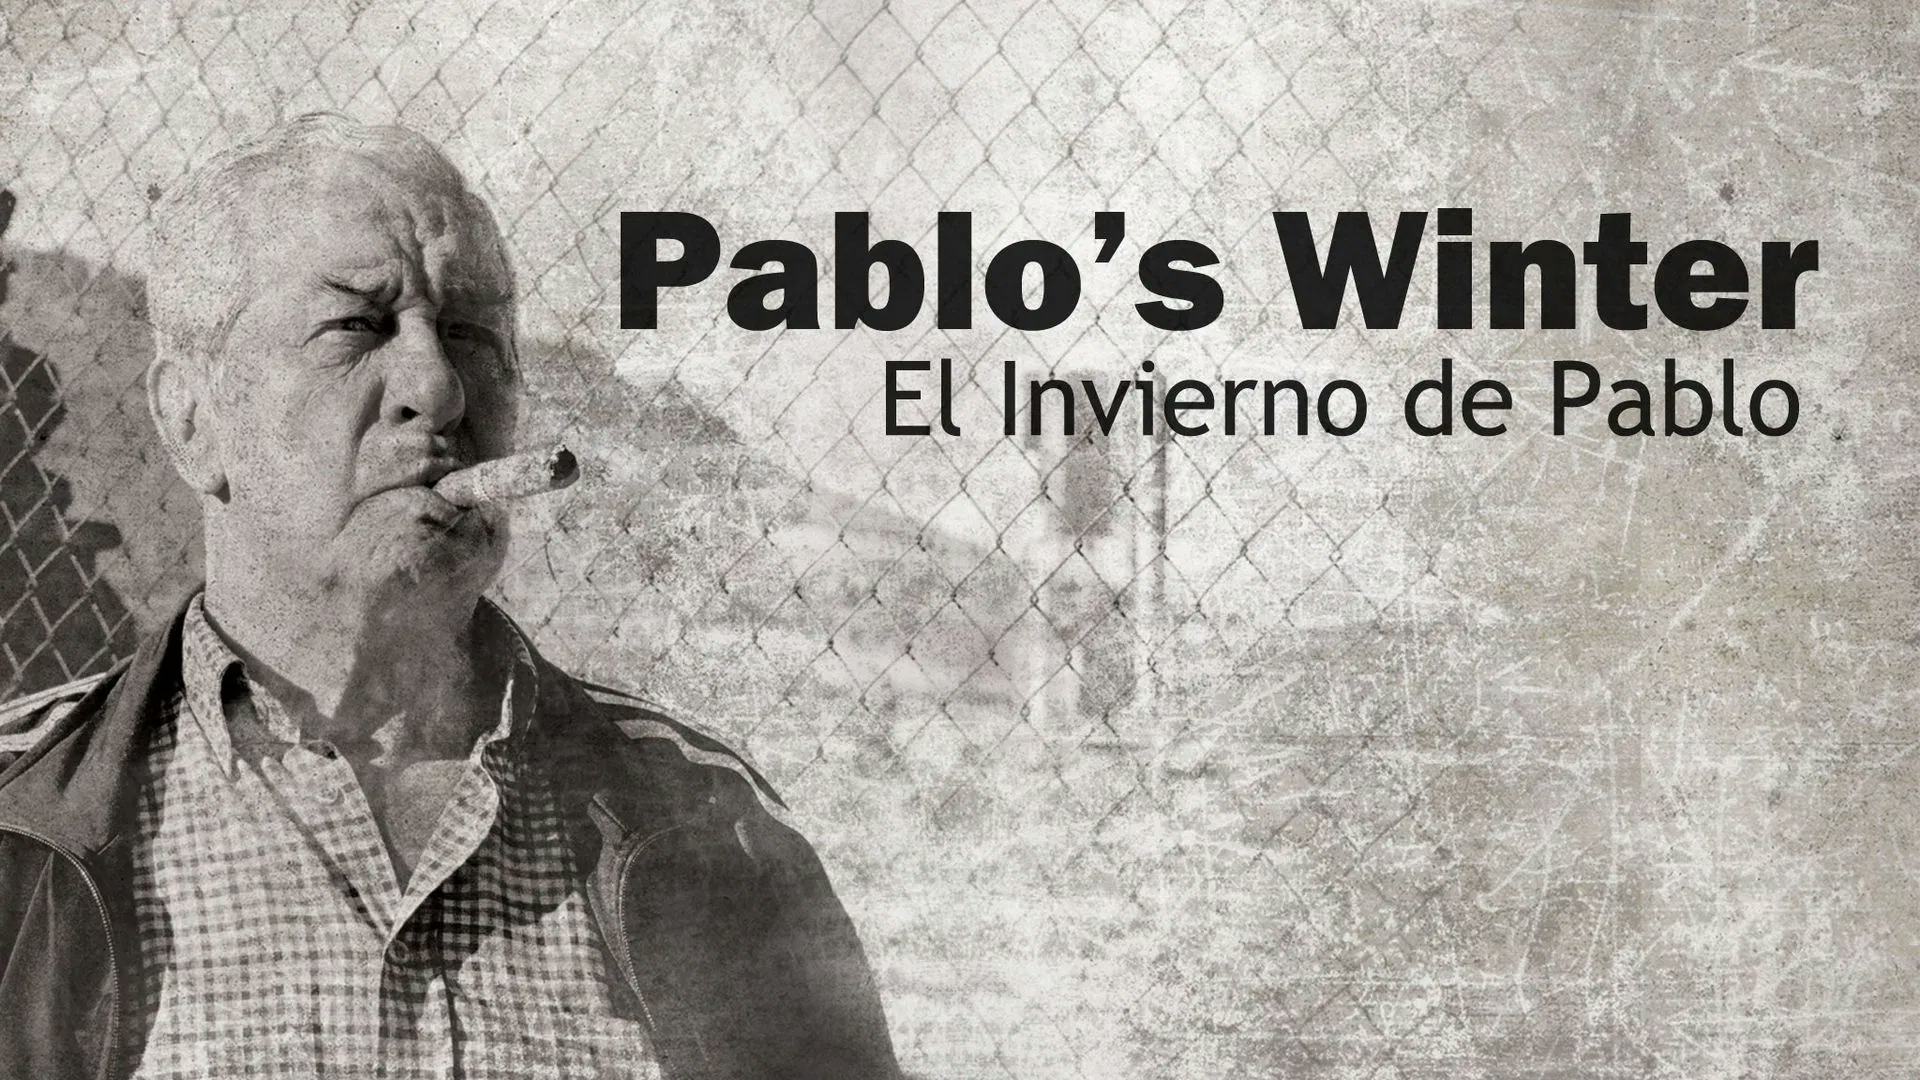 Pablo's Winter